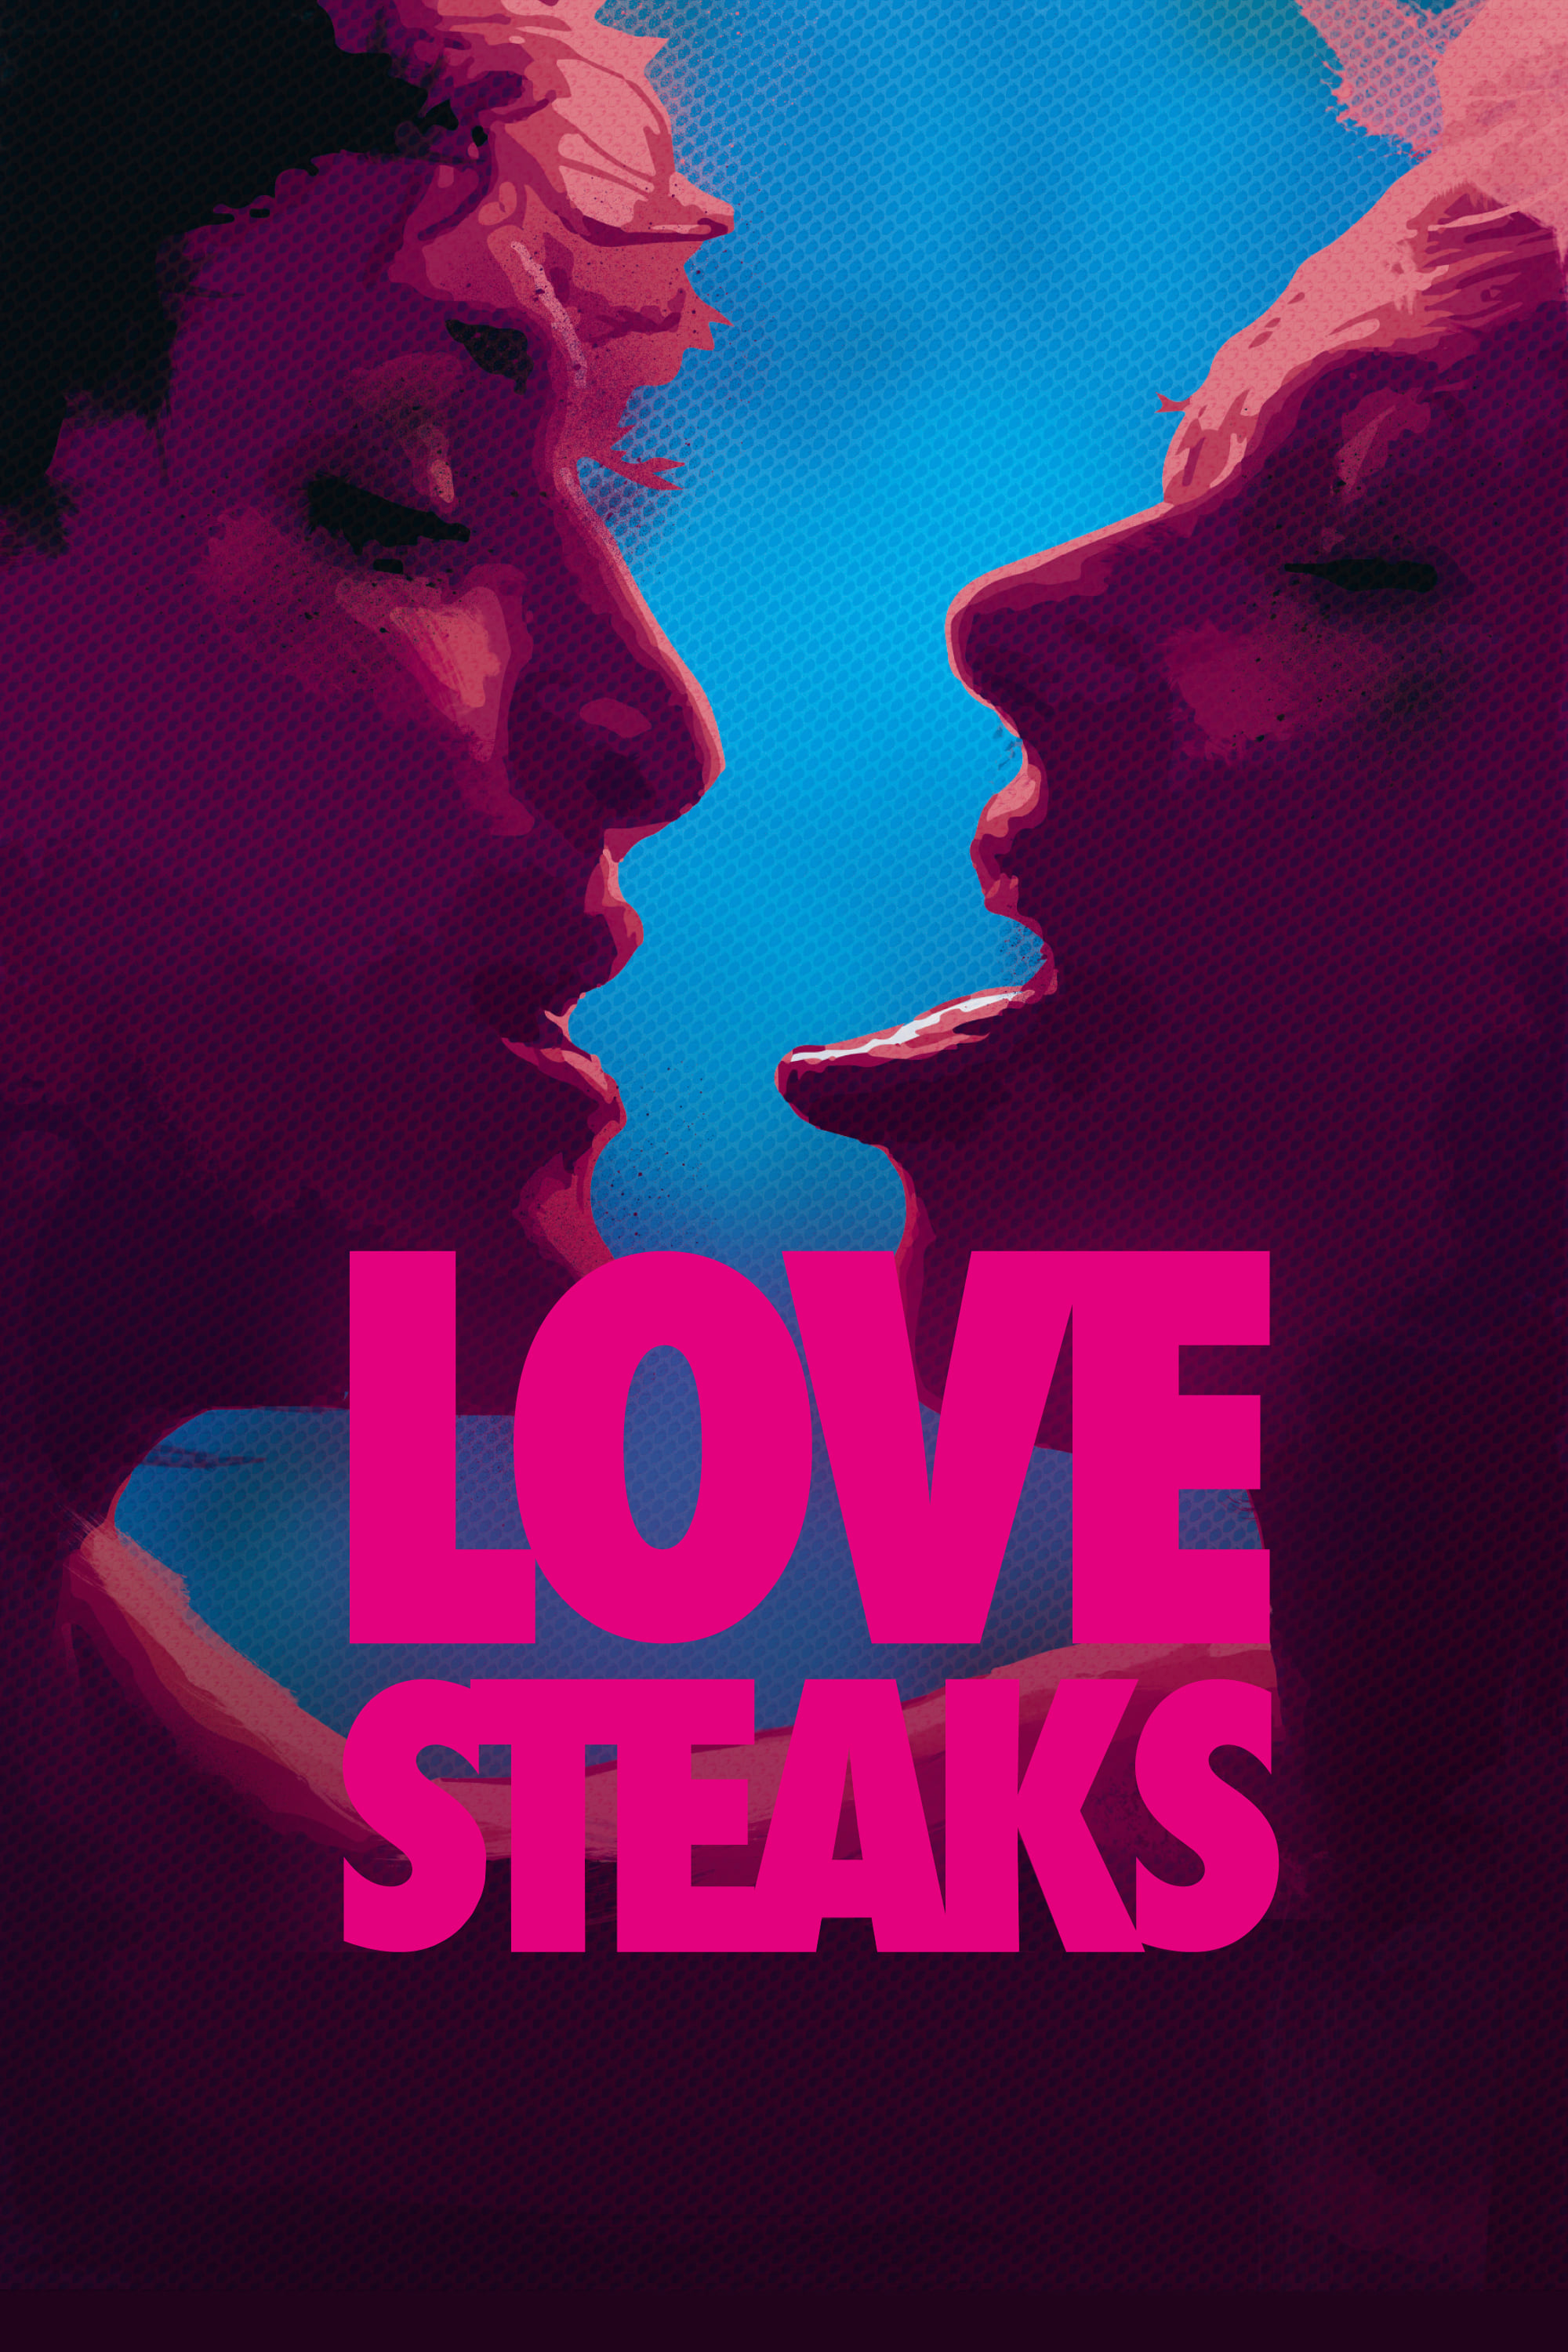 Affiche du film Love steaks 161896